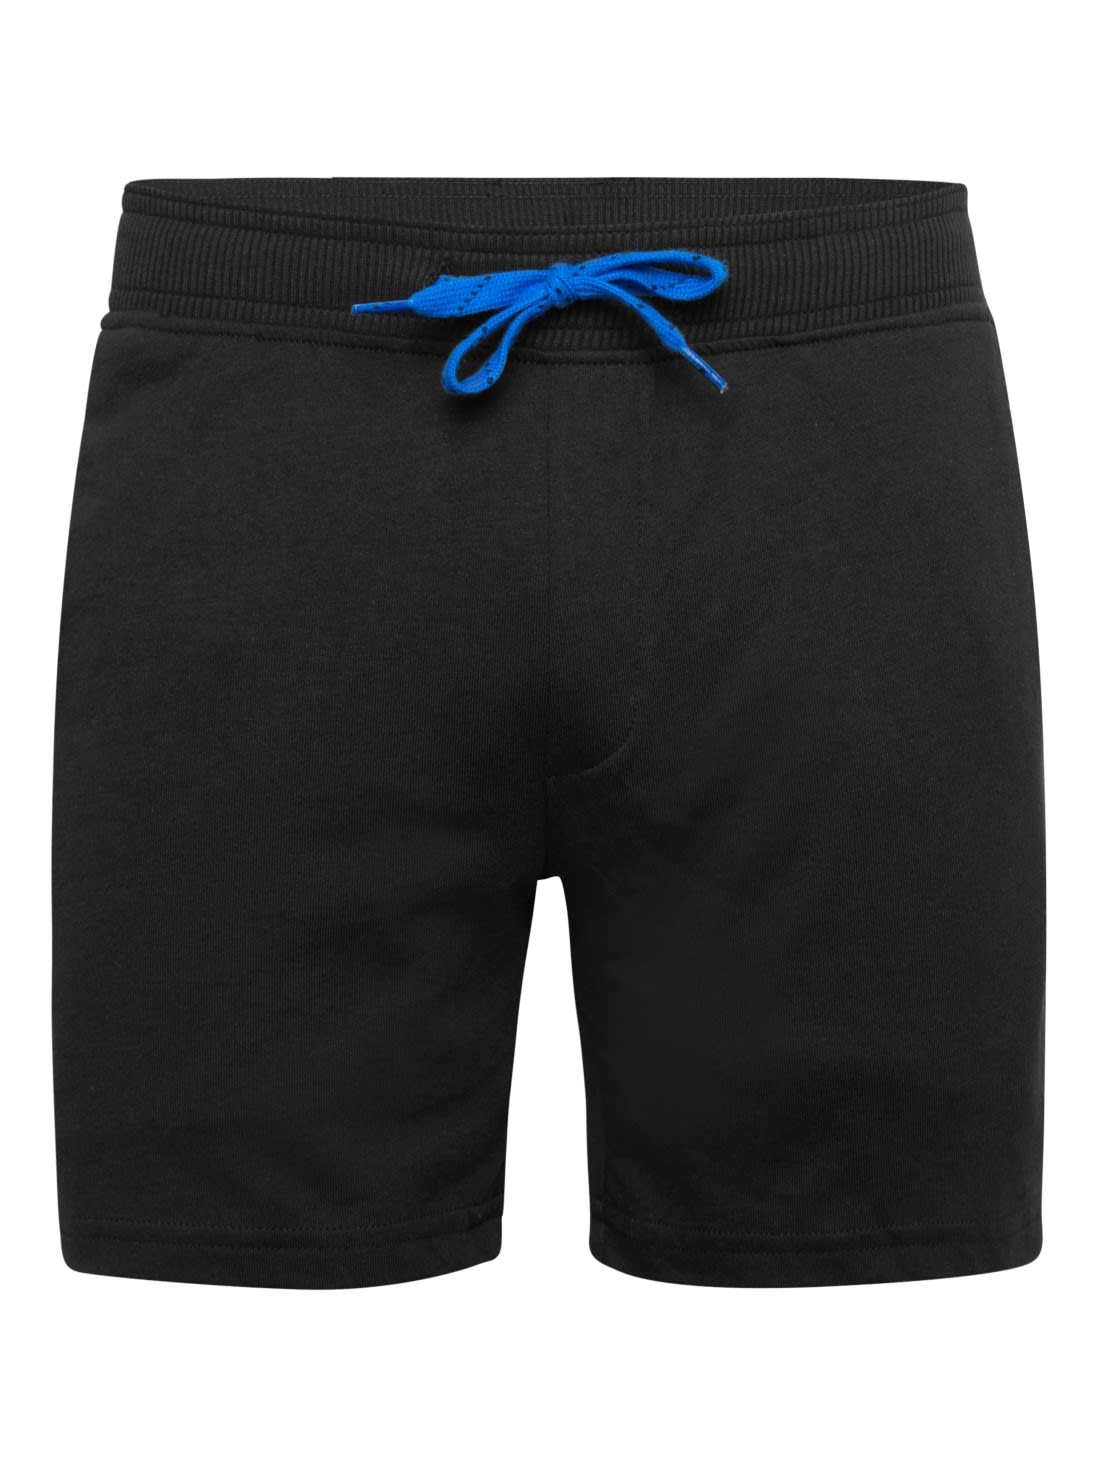 Buy Juniors Shorts Boys Apparel Bottoms AB1